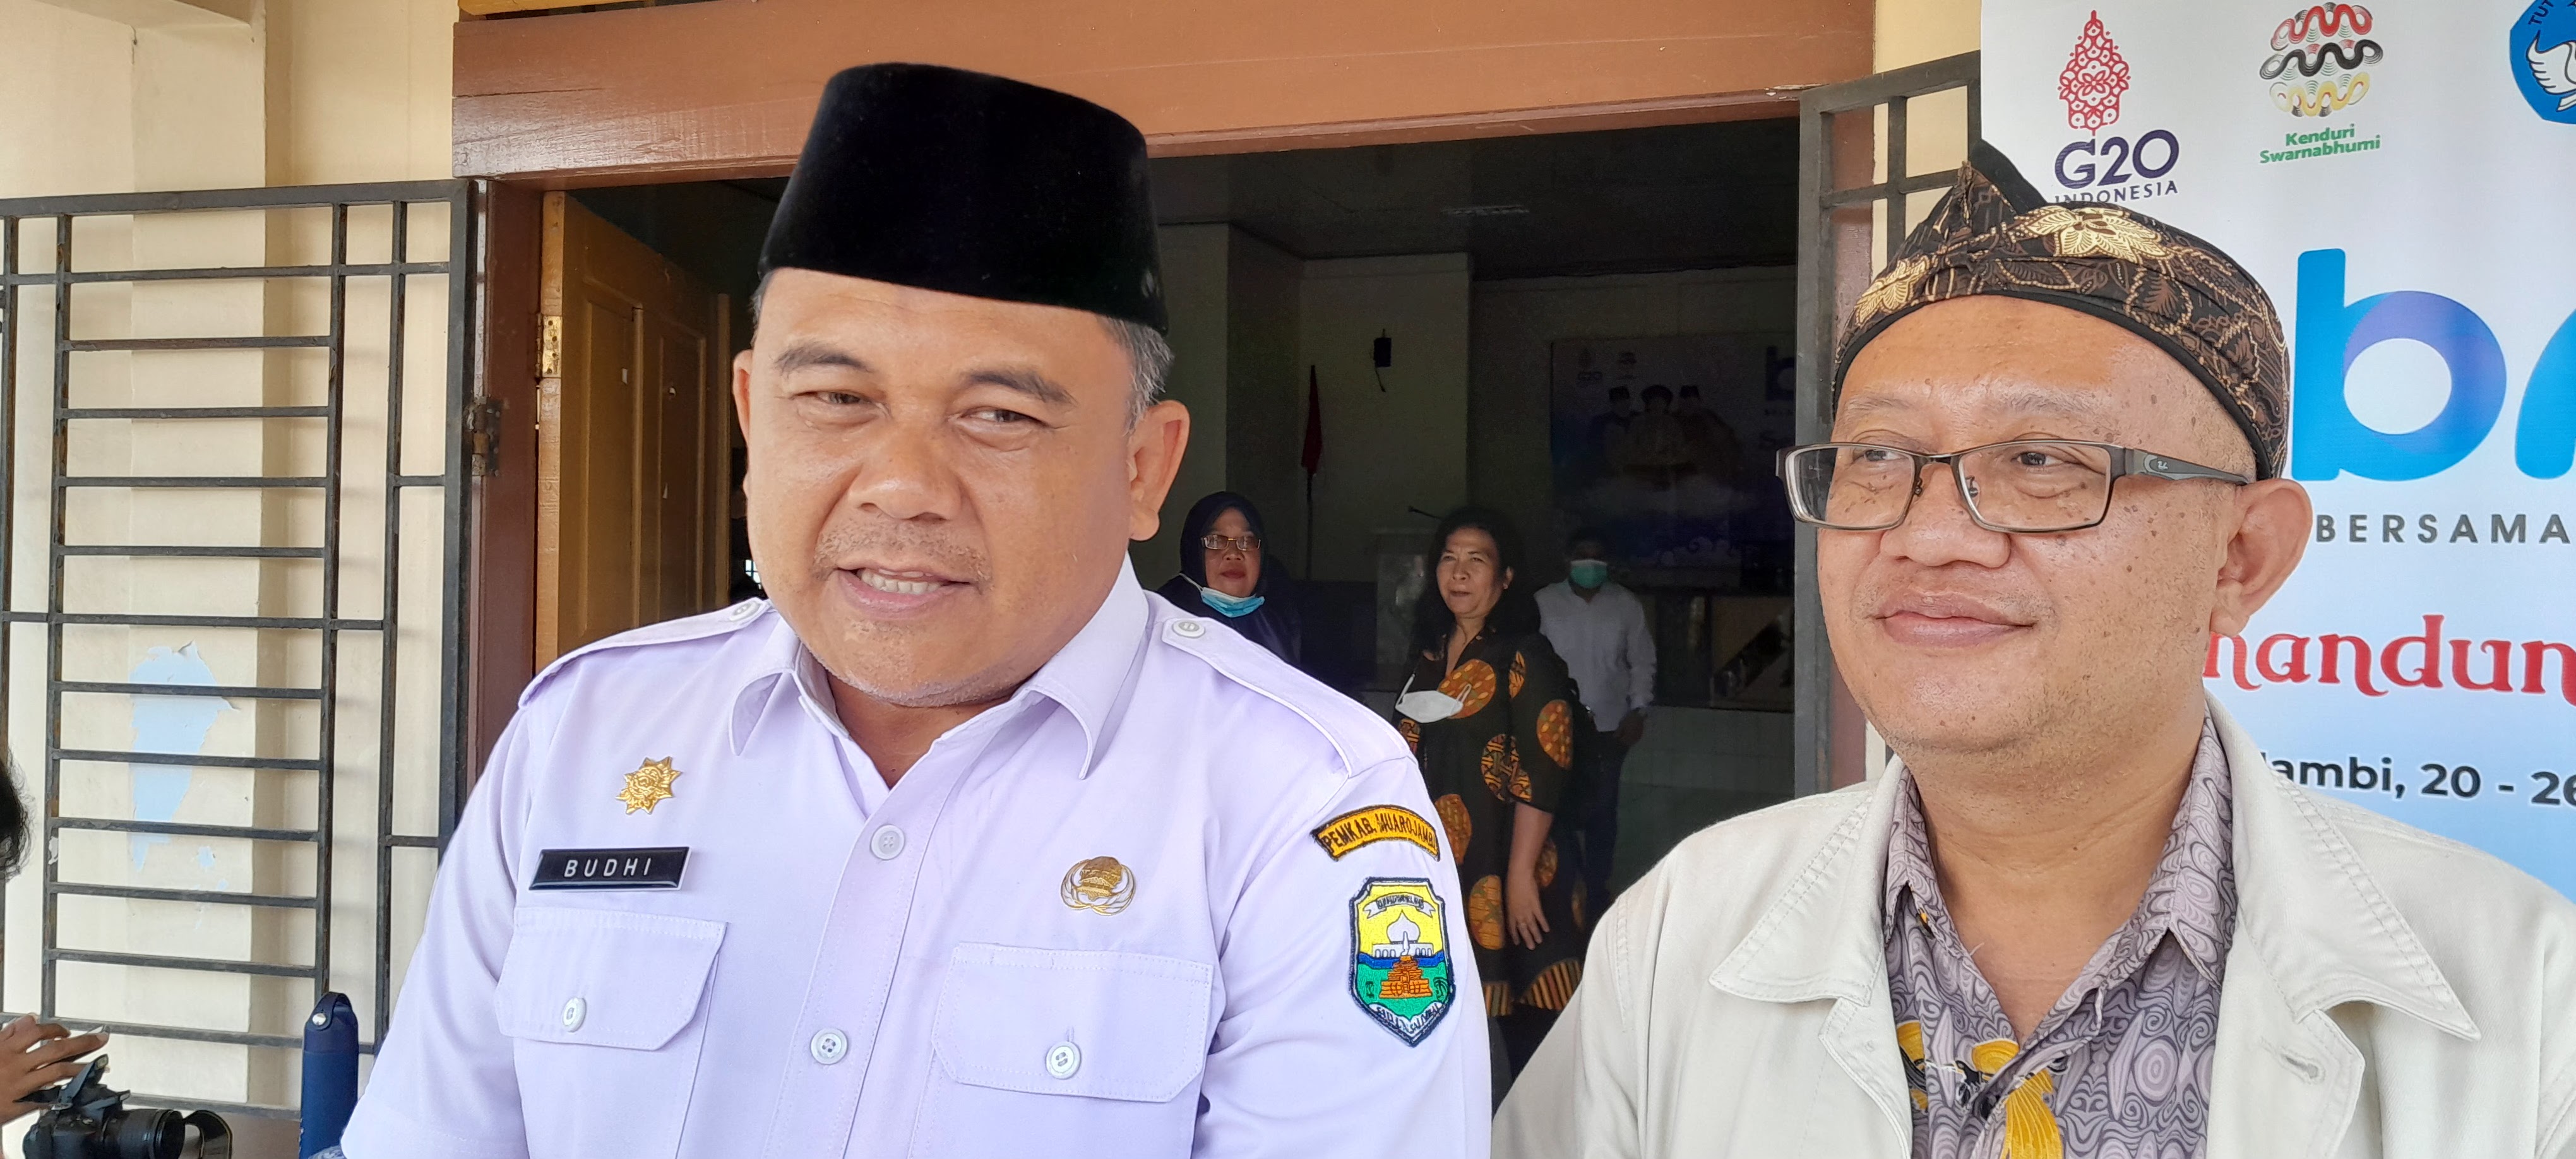 Pemkab Muaro Jambi Kirim BKD ke Kemendagri Pertanyakan Soal Pelantikan Hasil Lelang Jabatan